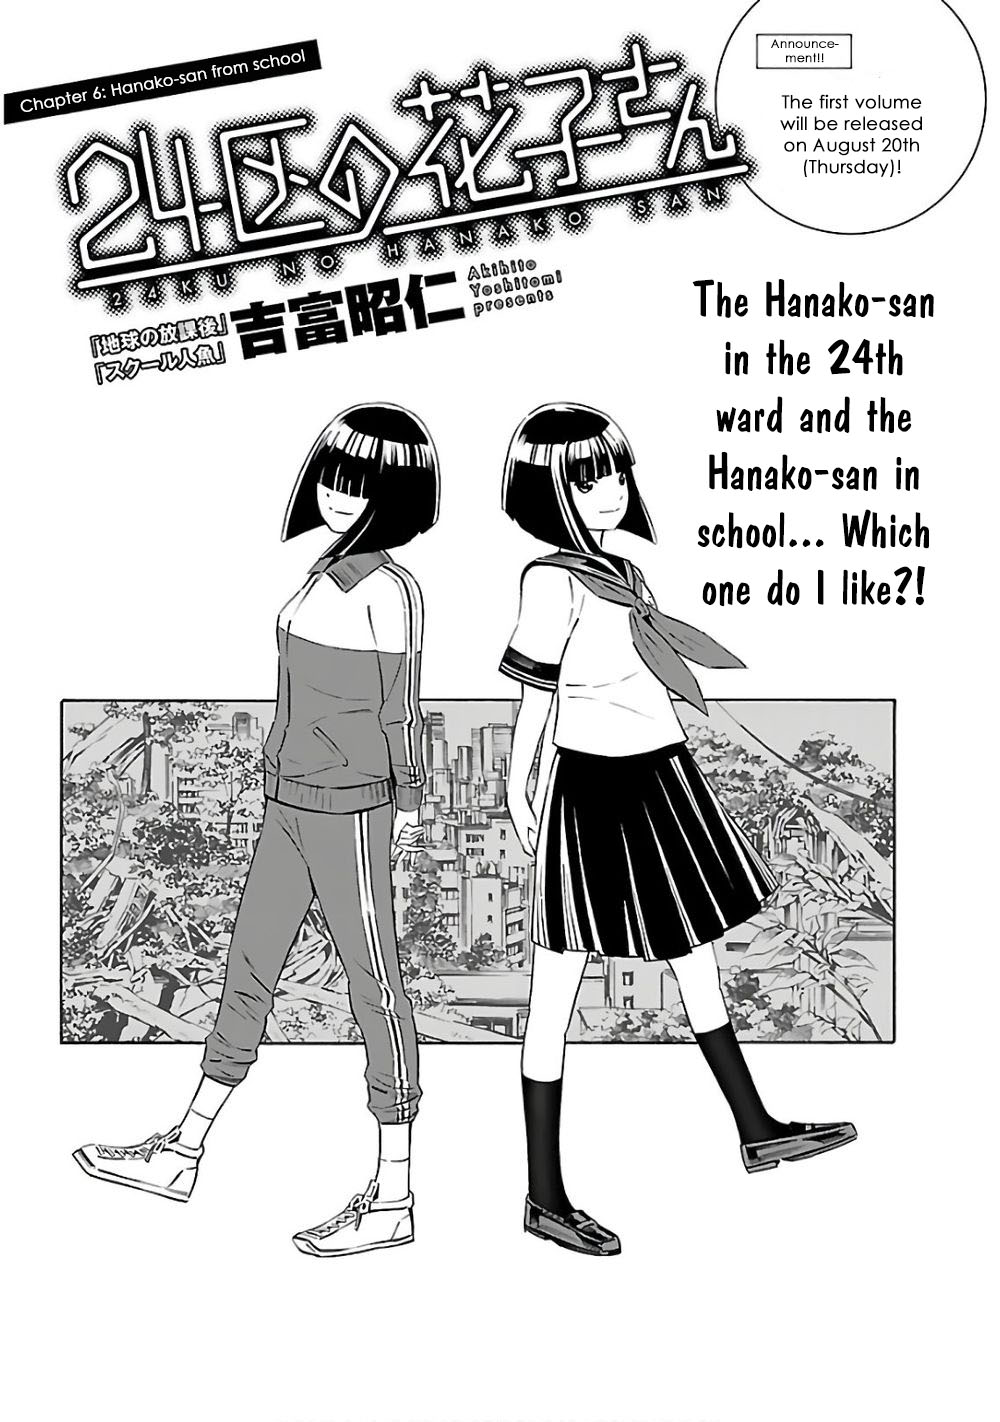 24-Ku No Hanako-San Chapter 6: Hanako-San From School - Picture 1